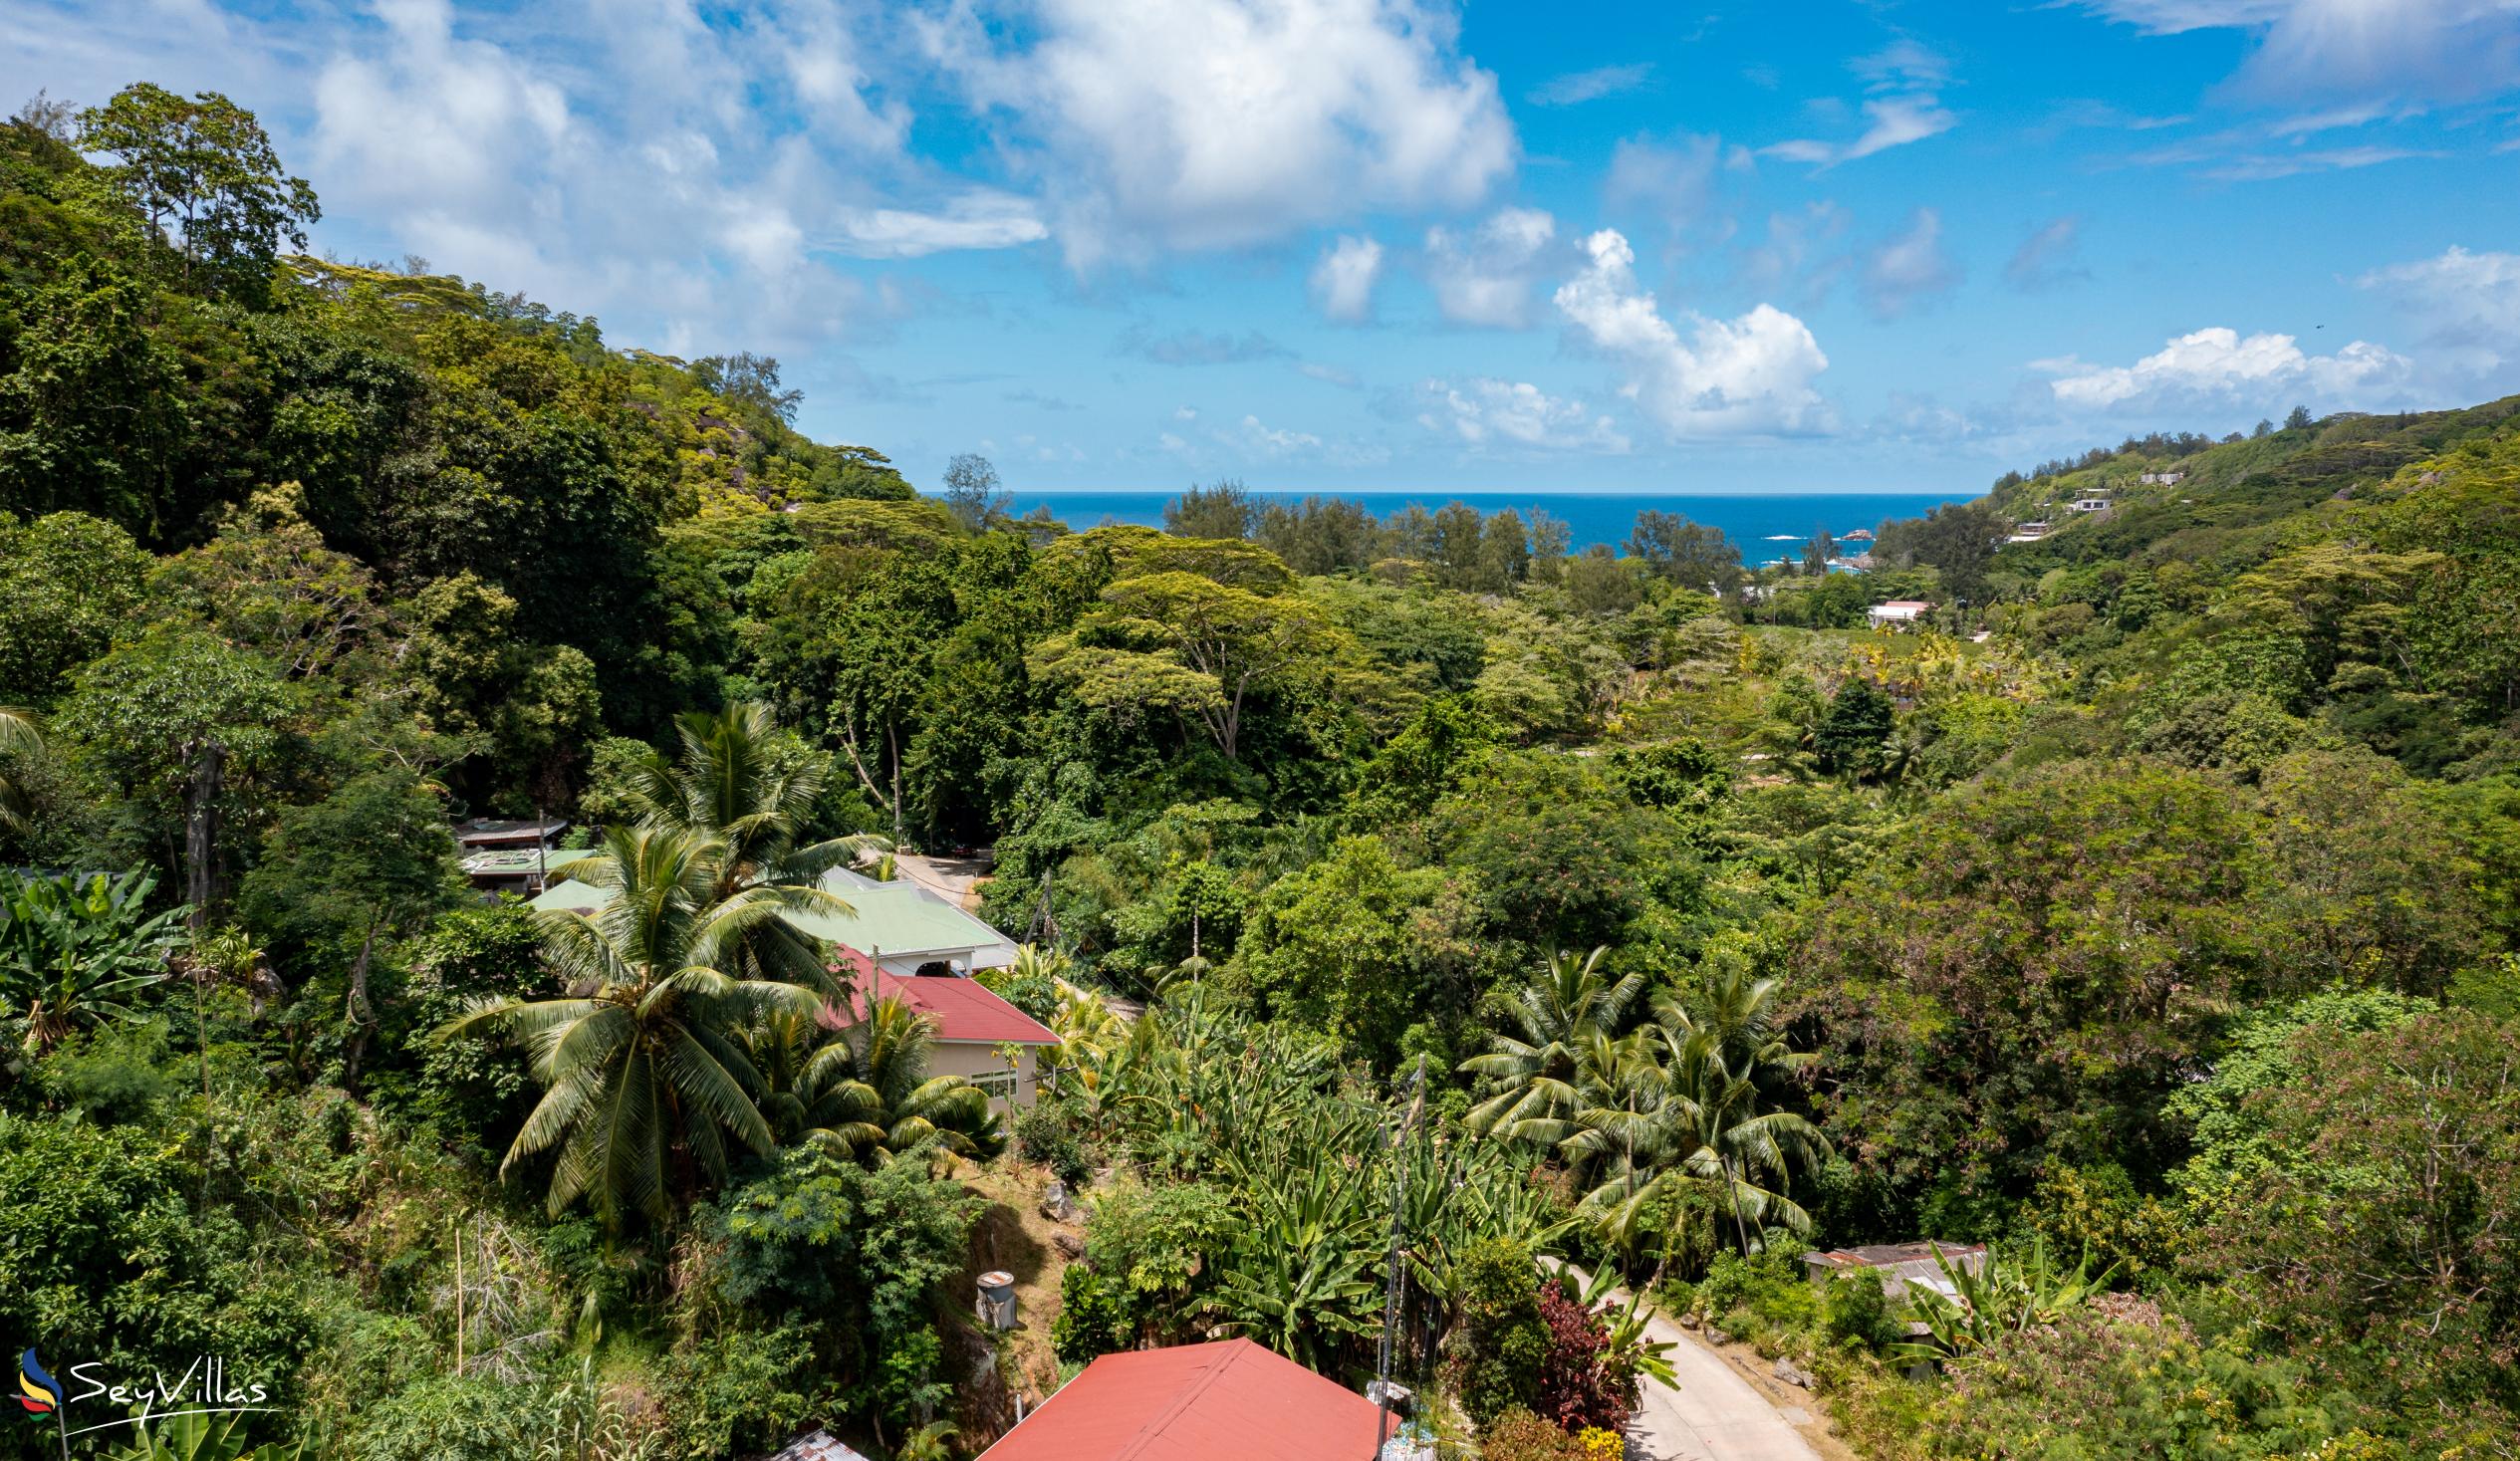 Foto 26: Takamaka Sky Villas - Posizione - Mahé (Seychelles)